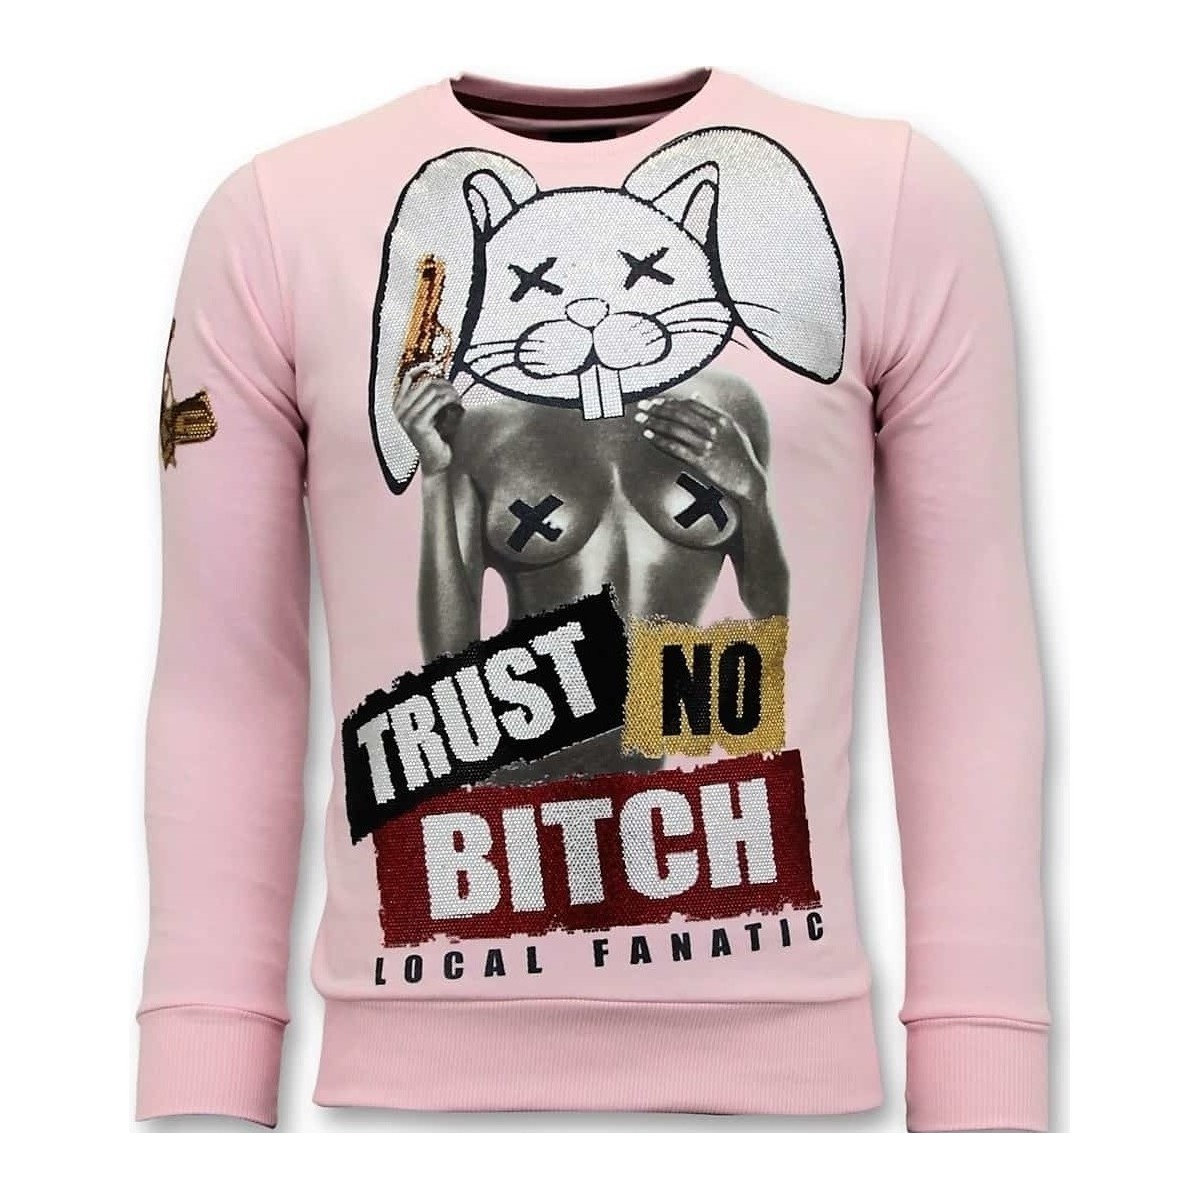 Kleidung Herren Sweatshirts Local Fanatic Trust No Bitch Rosa